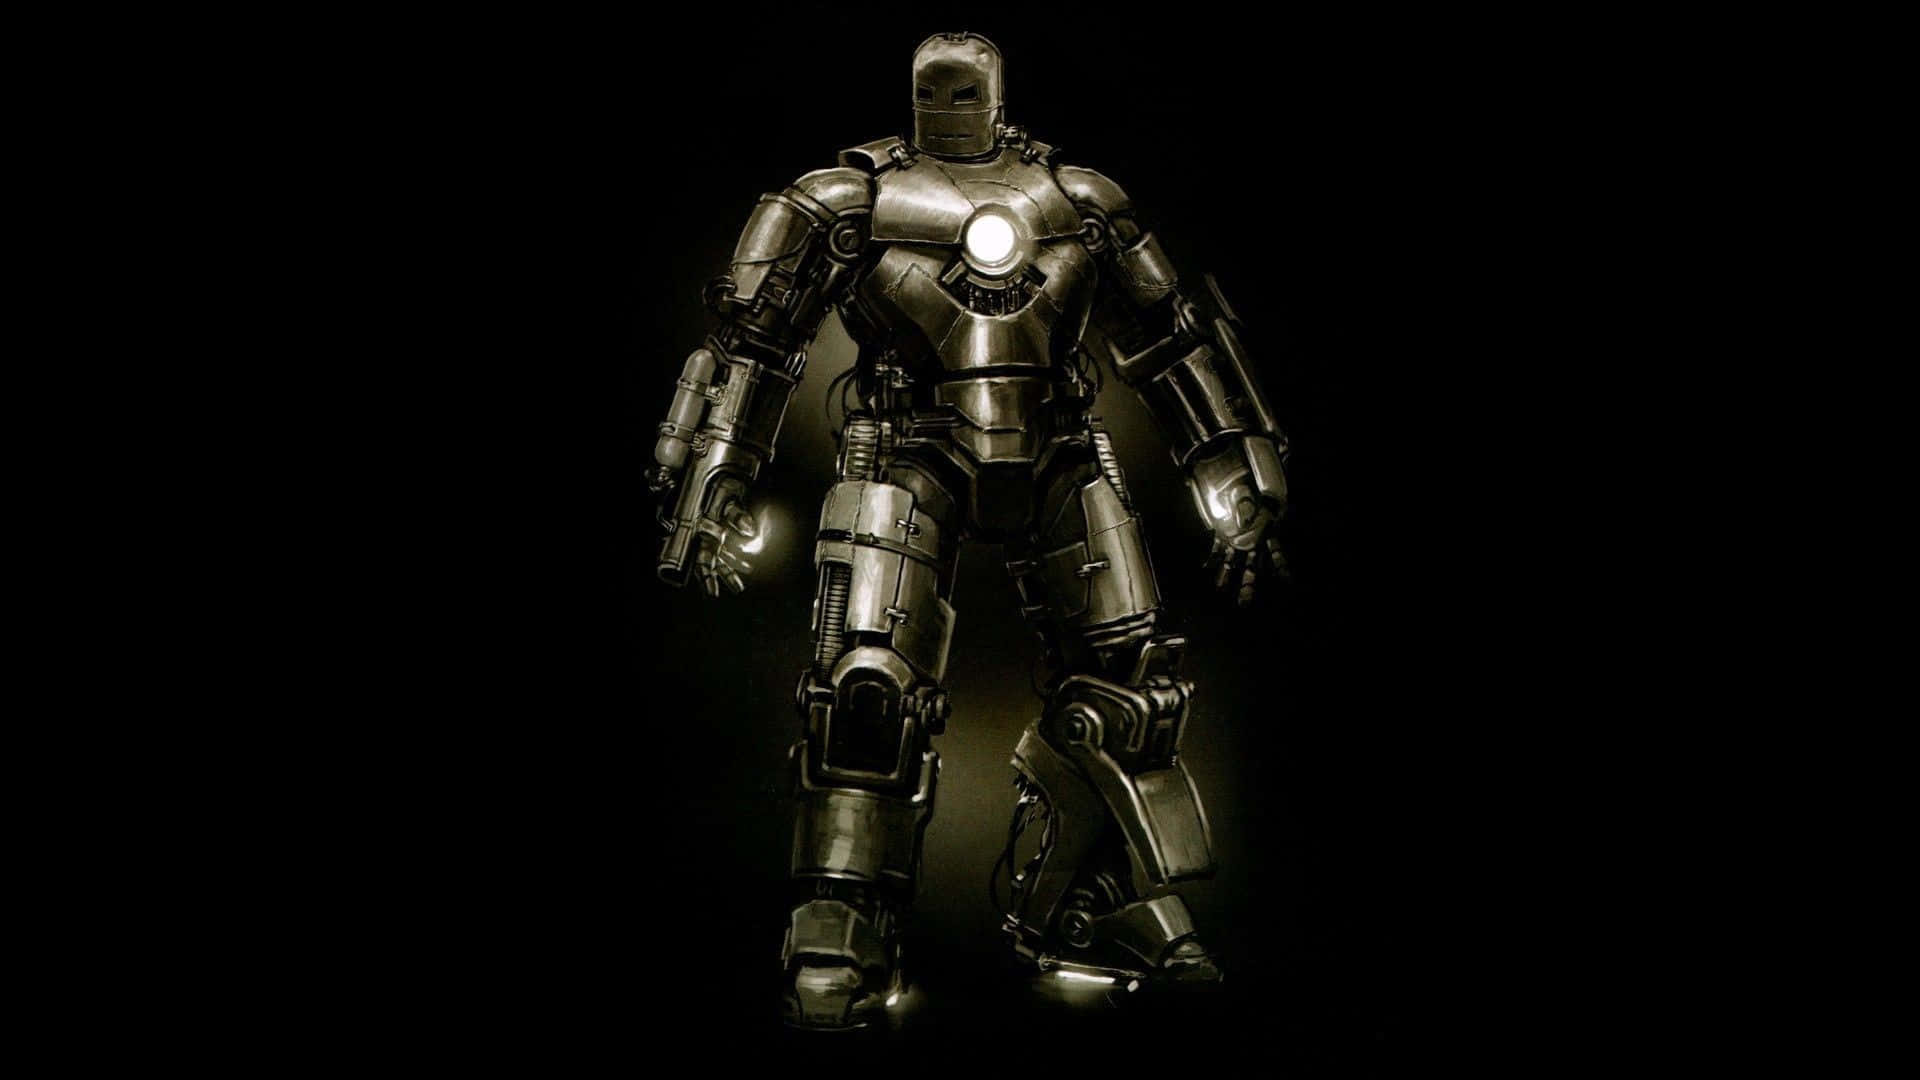 Tony Stark Aboard His Iron Man Suit Wallpaper